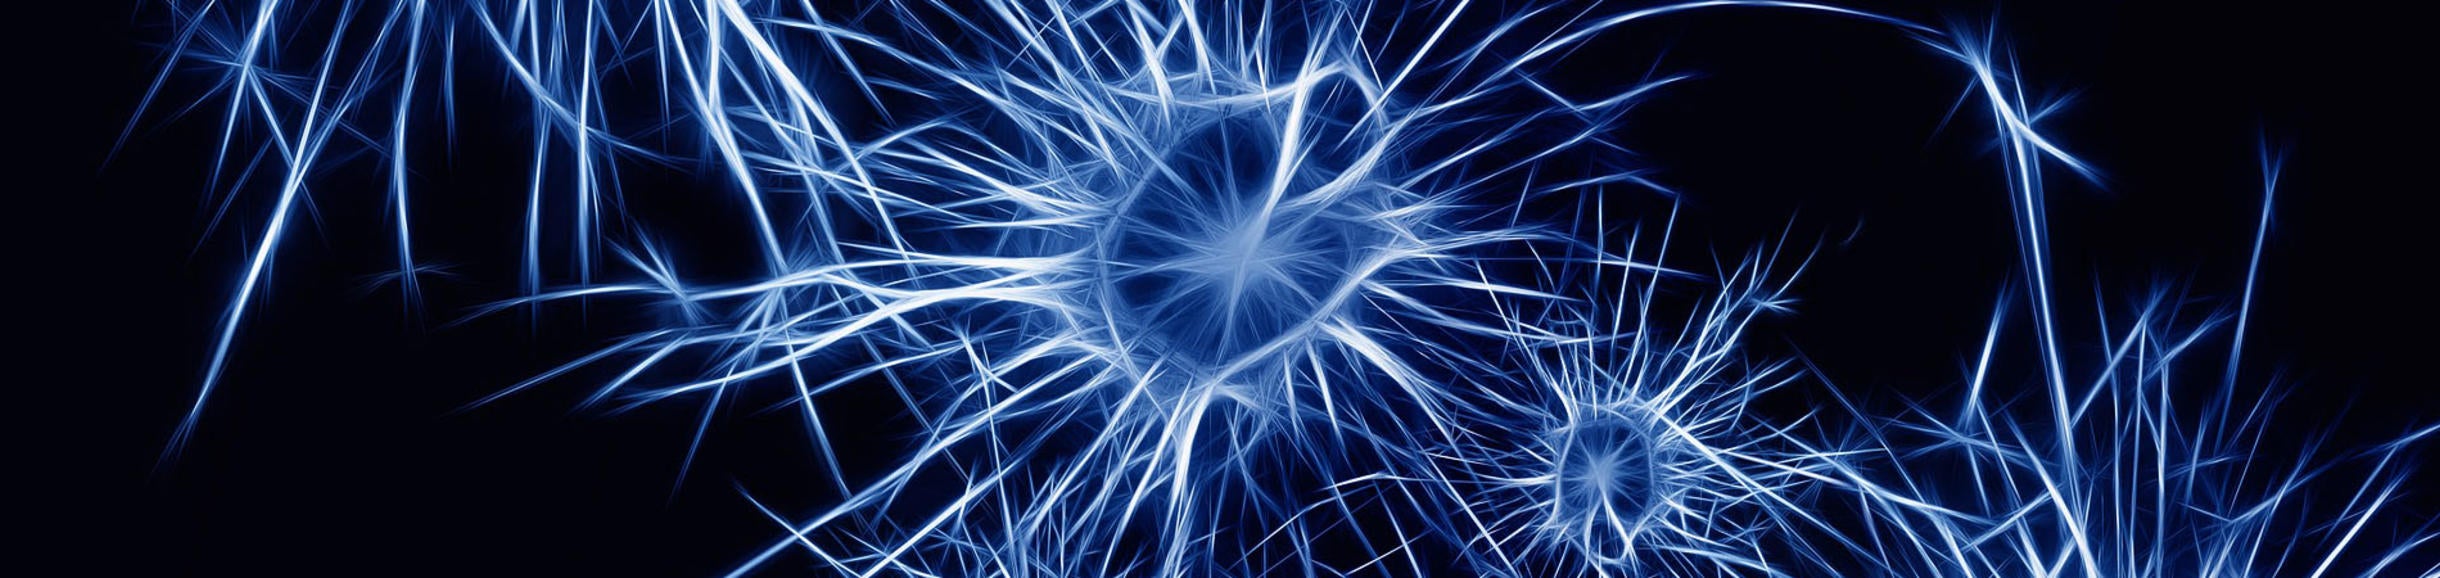 Neurons / Pixabay